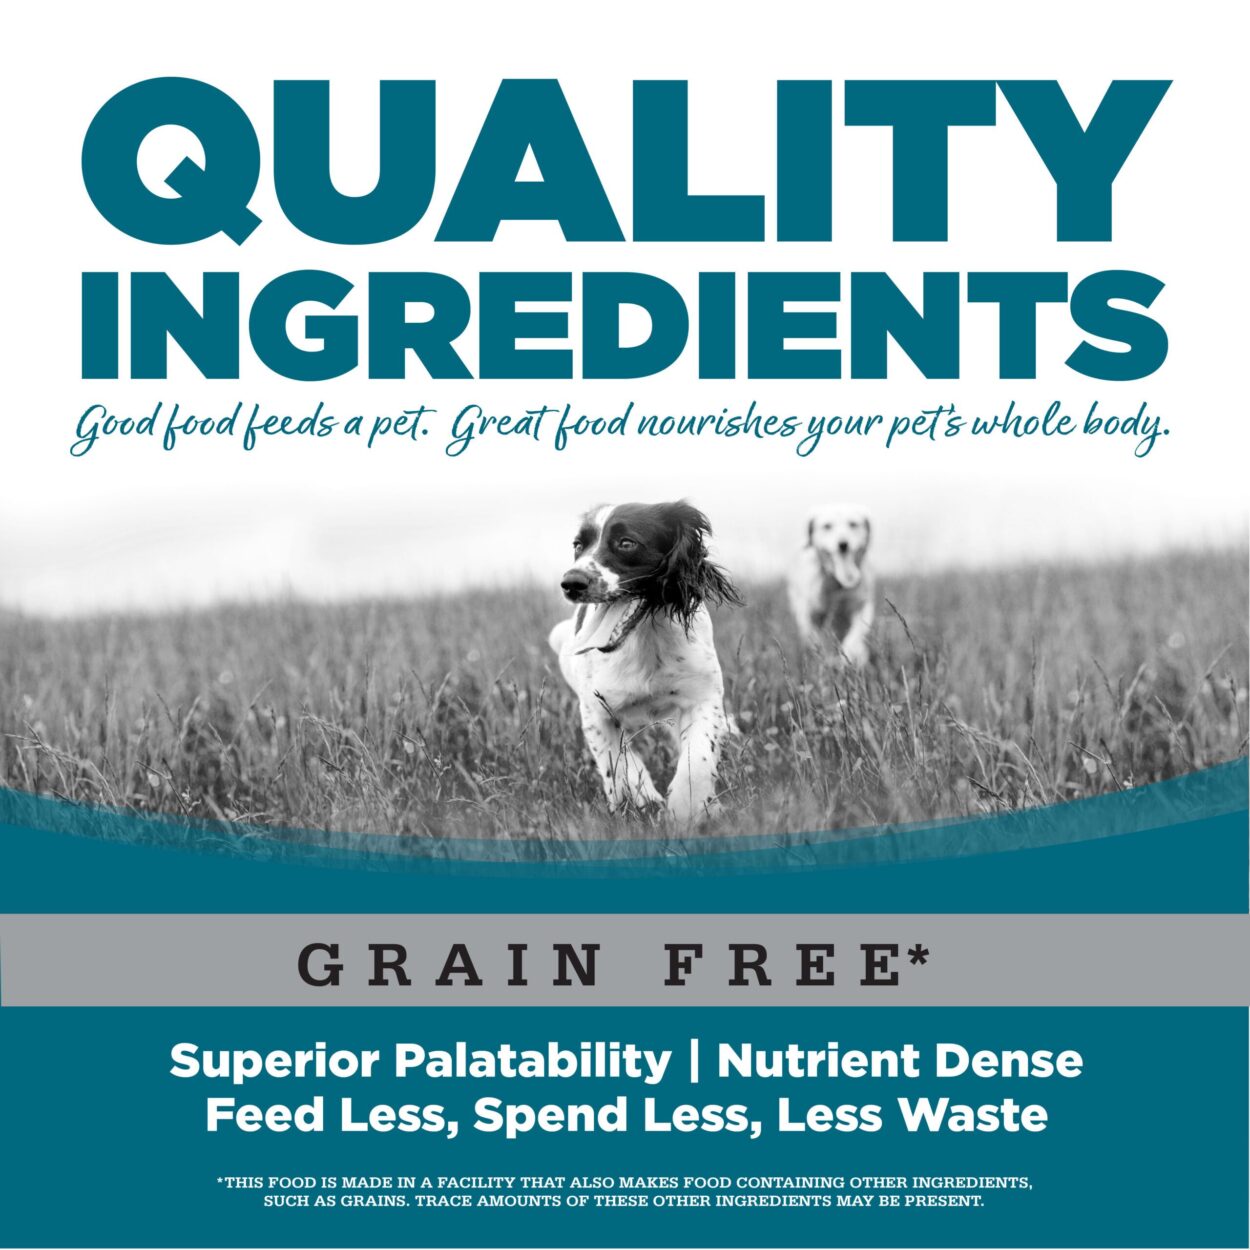 NUTRISOURCE GRAIN FREE CHICKEN & PEA - DOG FOOD